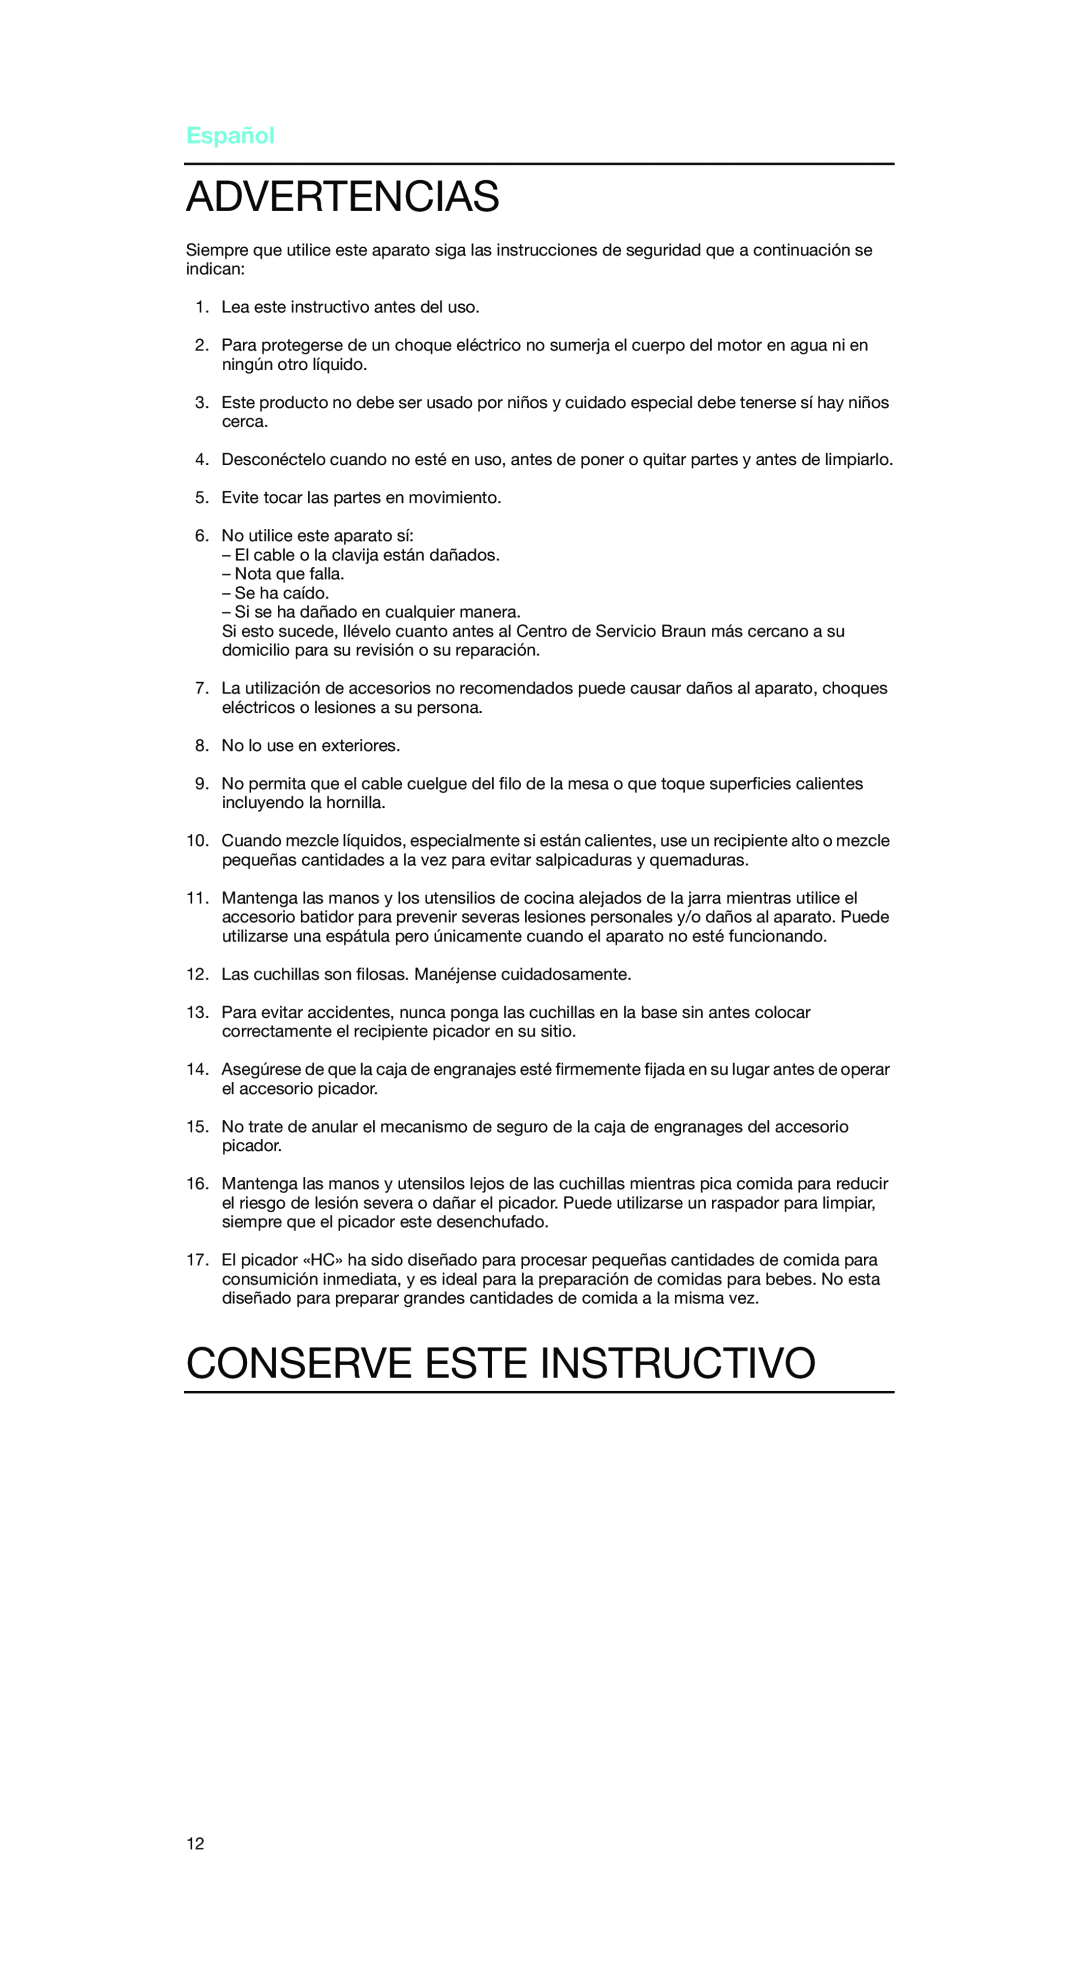 Braun MR 5500 M manual Advertencias, Conserve Este Instructivo, Español 